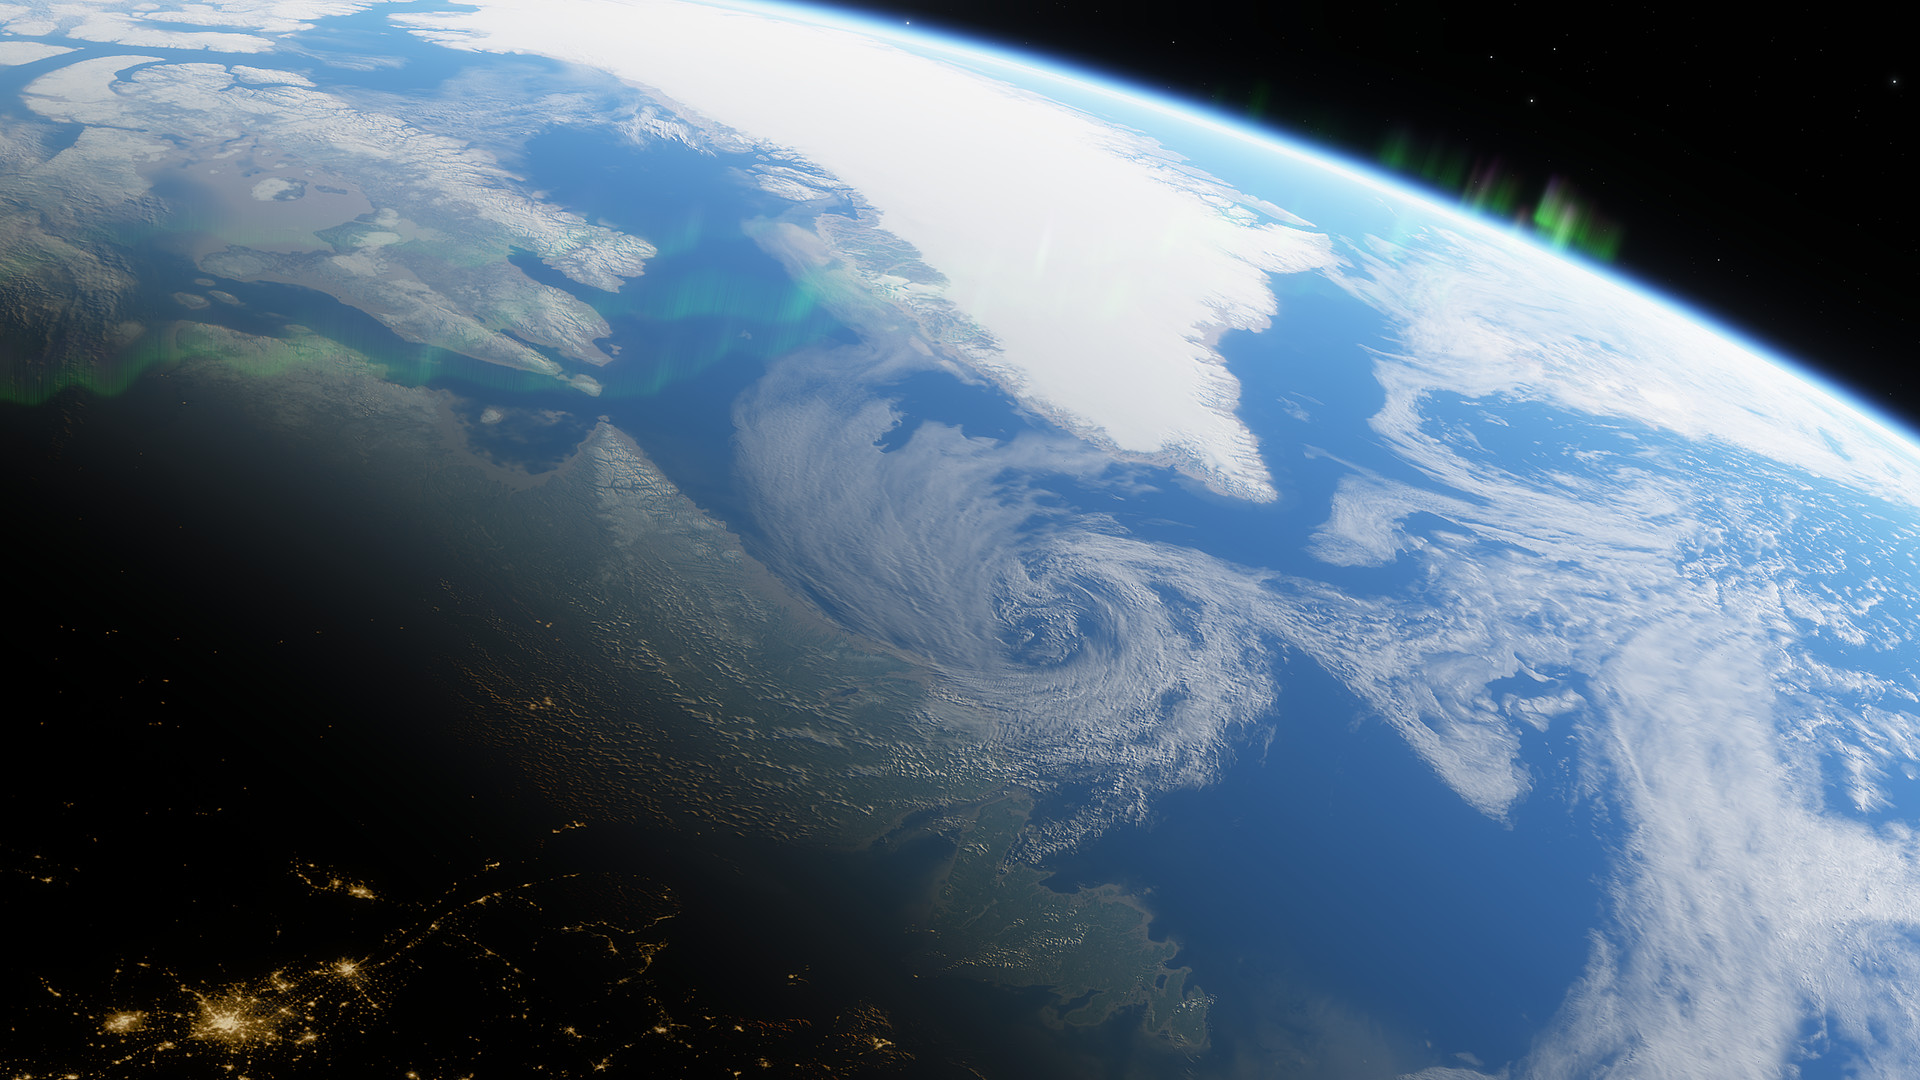 SpaceEngine screenshot 3